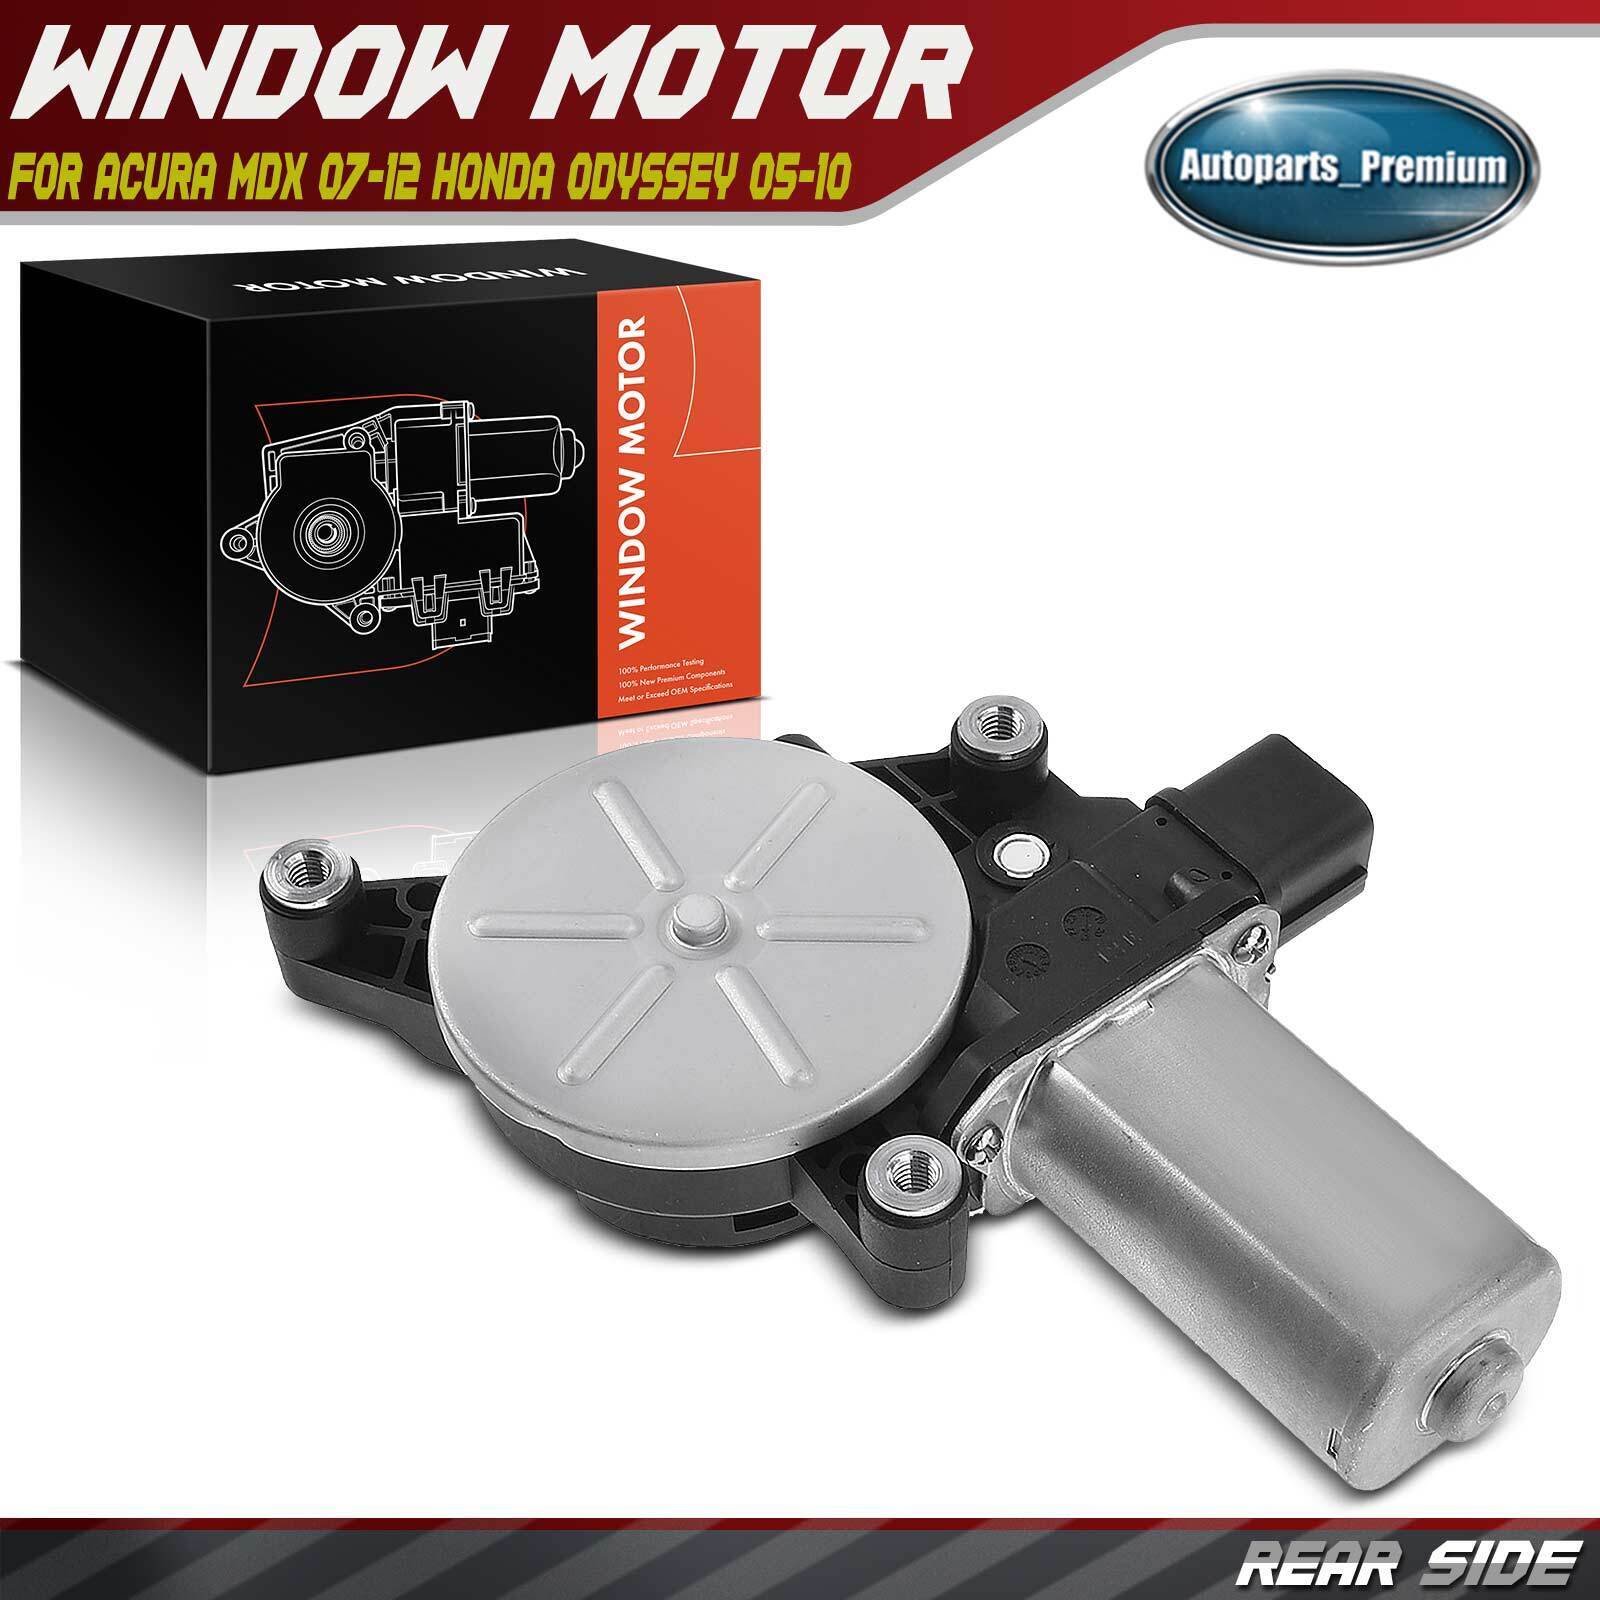 Rear LH or Right Power Window Lift Motor for Acura MDX 07-12 Honda Odyssey 05-10